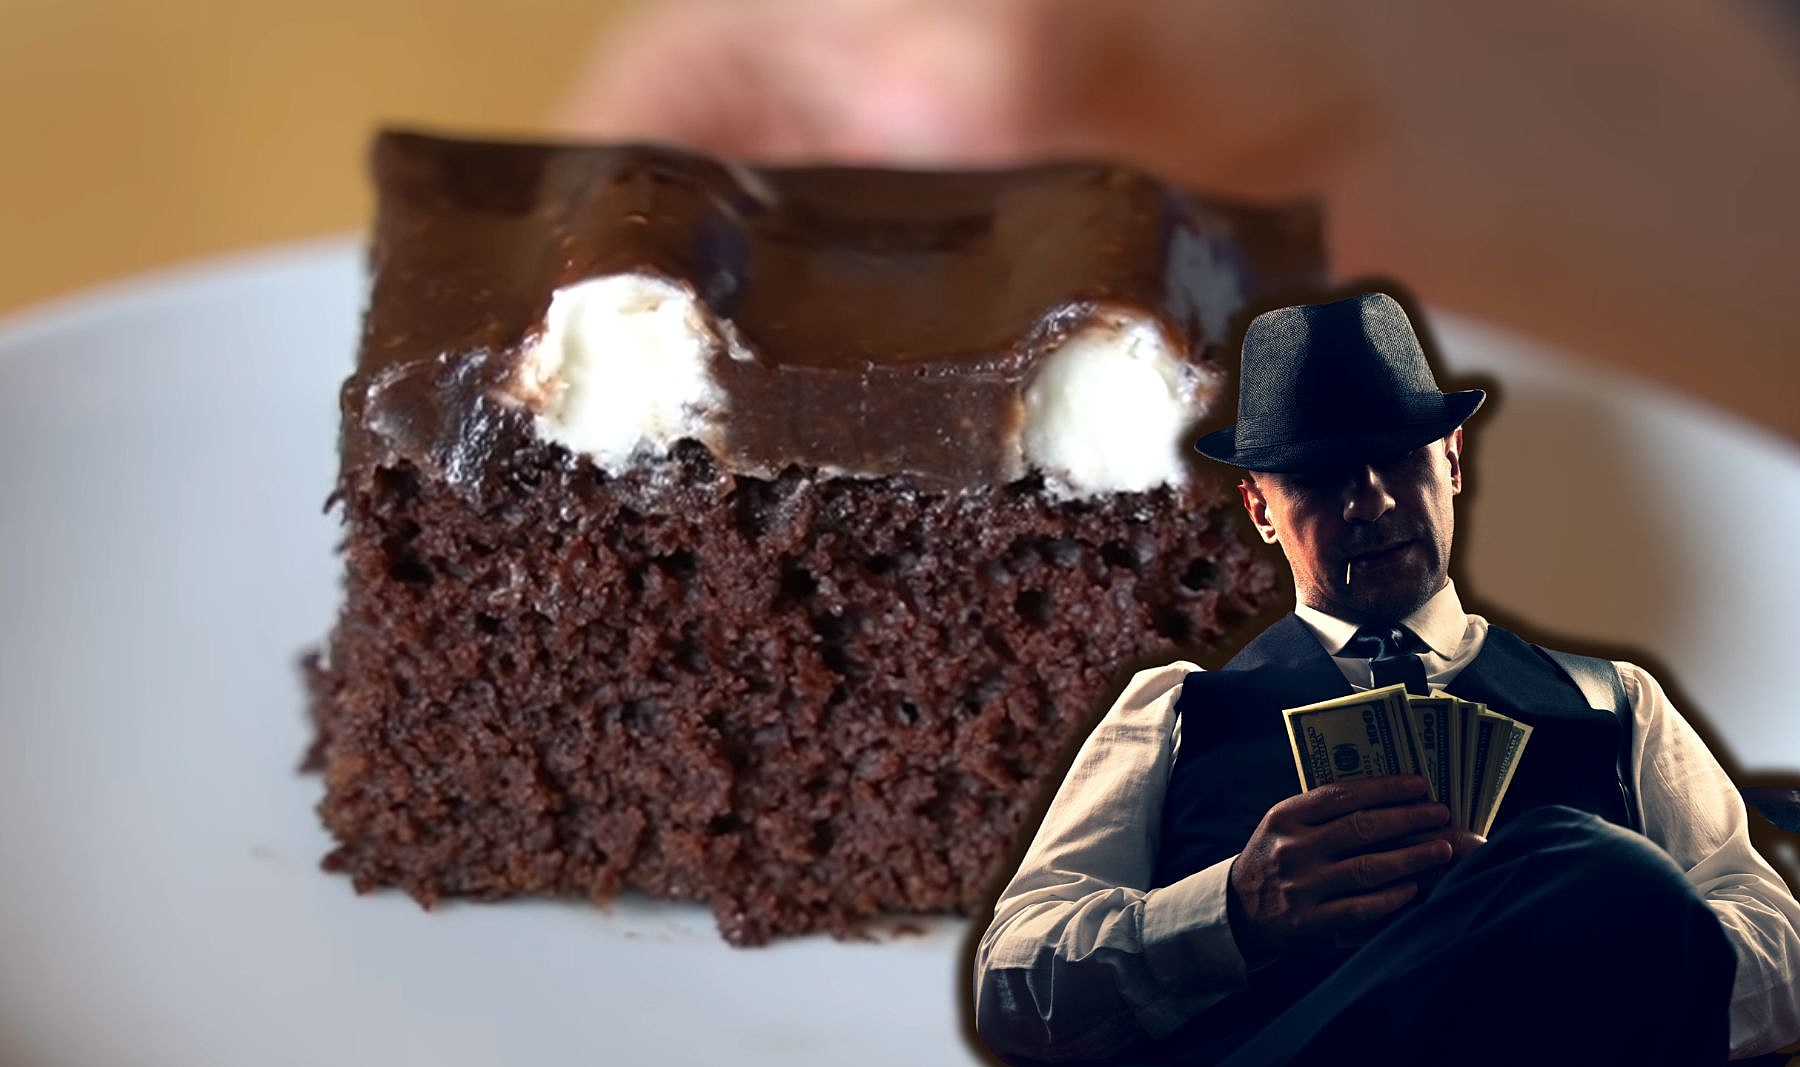 The History Behind The Michigan-Made 'Bumpy Cake'